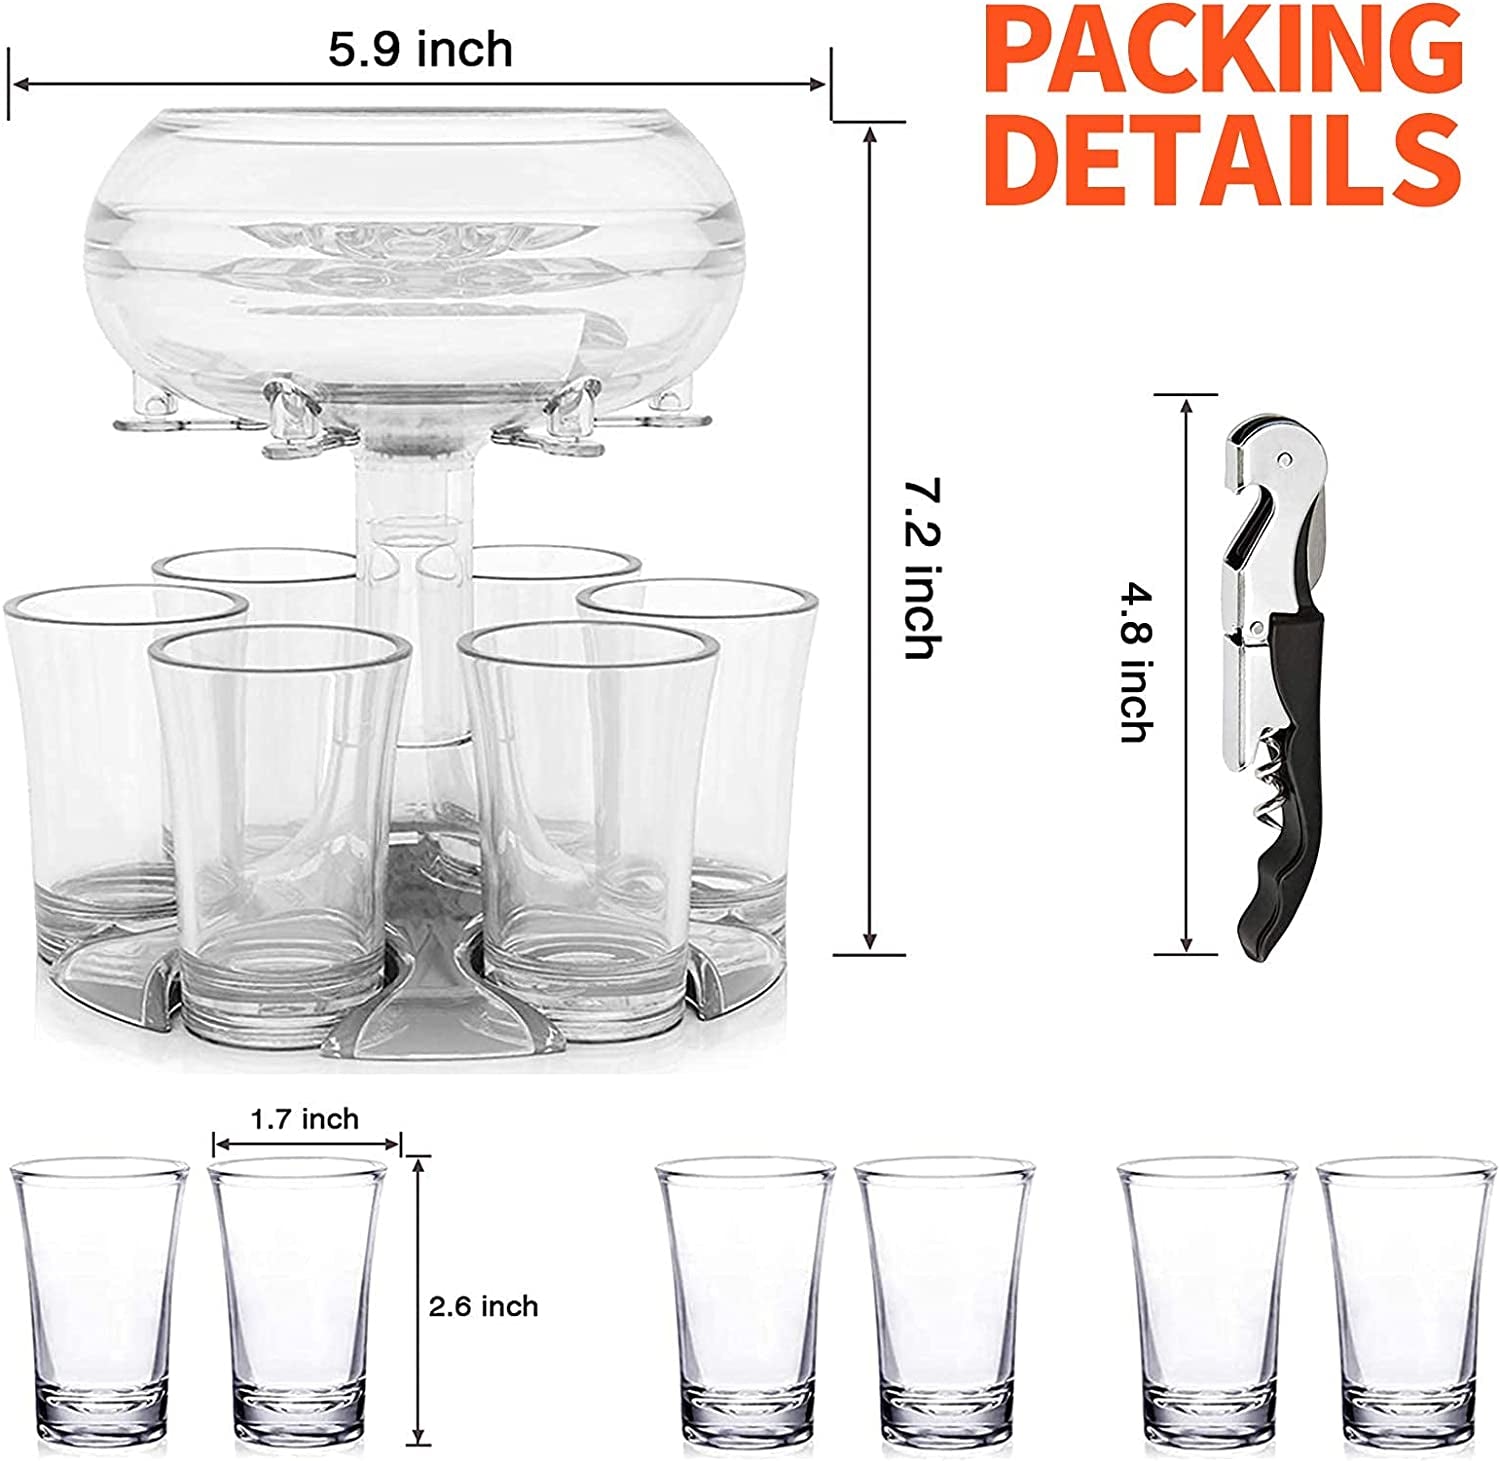 Adjustable Shot Glass Dispenser: Plexiglass, Includes 6 Drinking Glasses